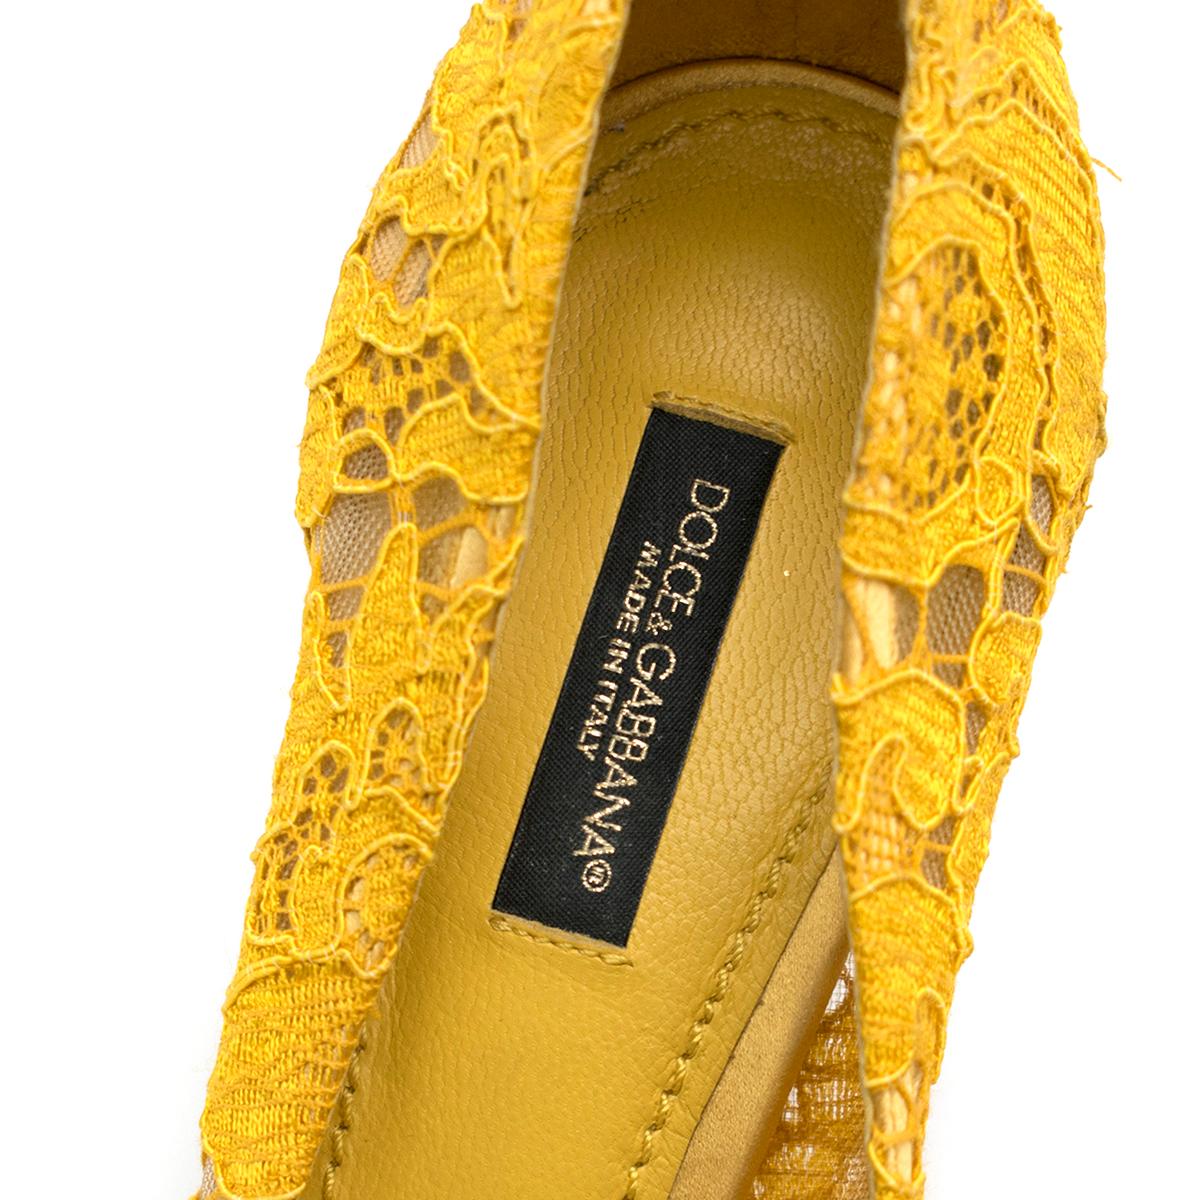 Dolce & Gabbana Bellucci Taormina Yellow Lace Pumps - Current Season SIZE 37.5 1